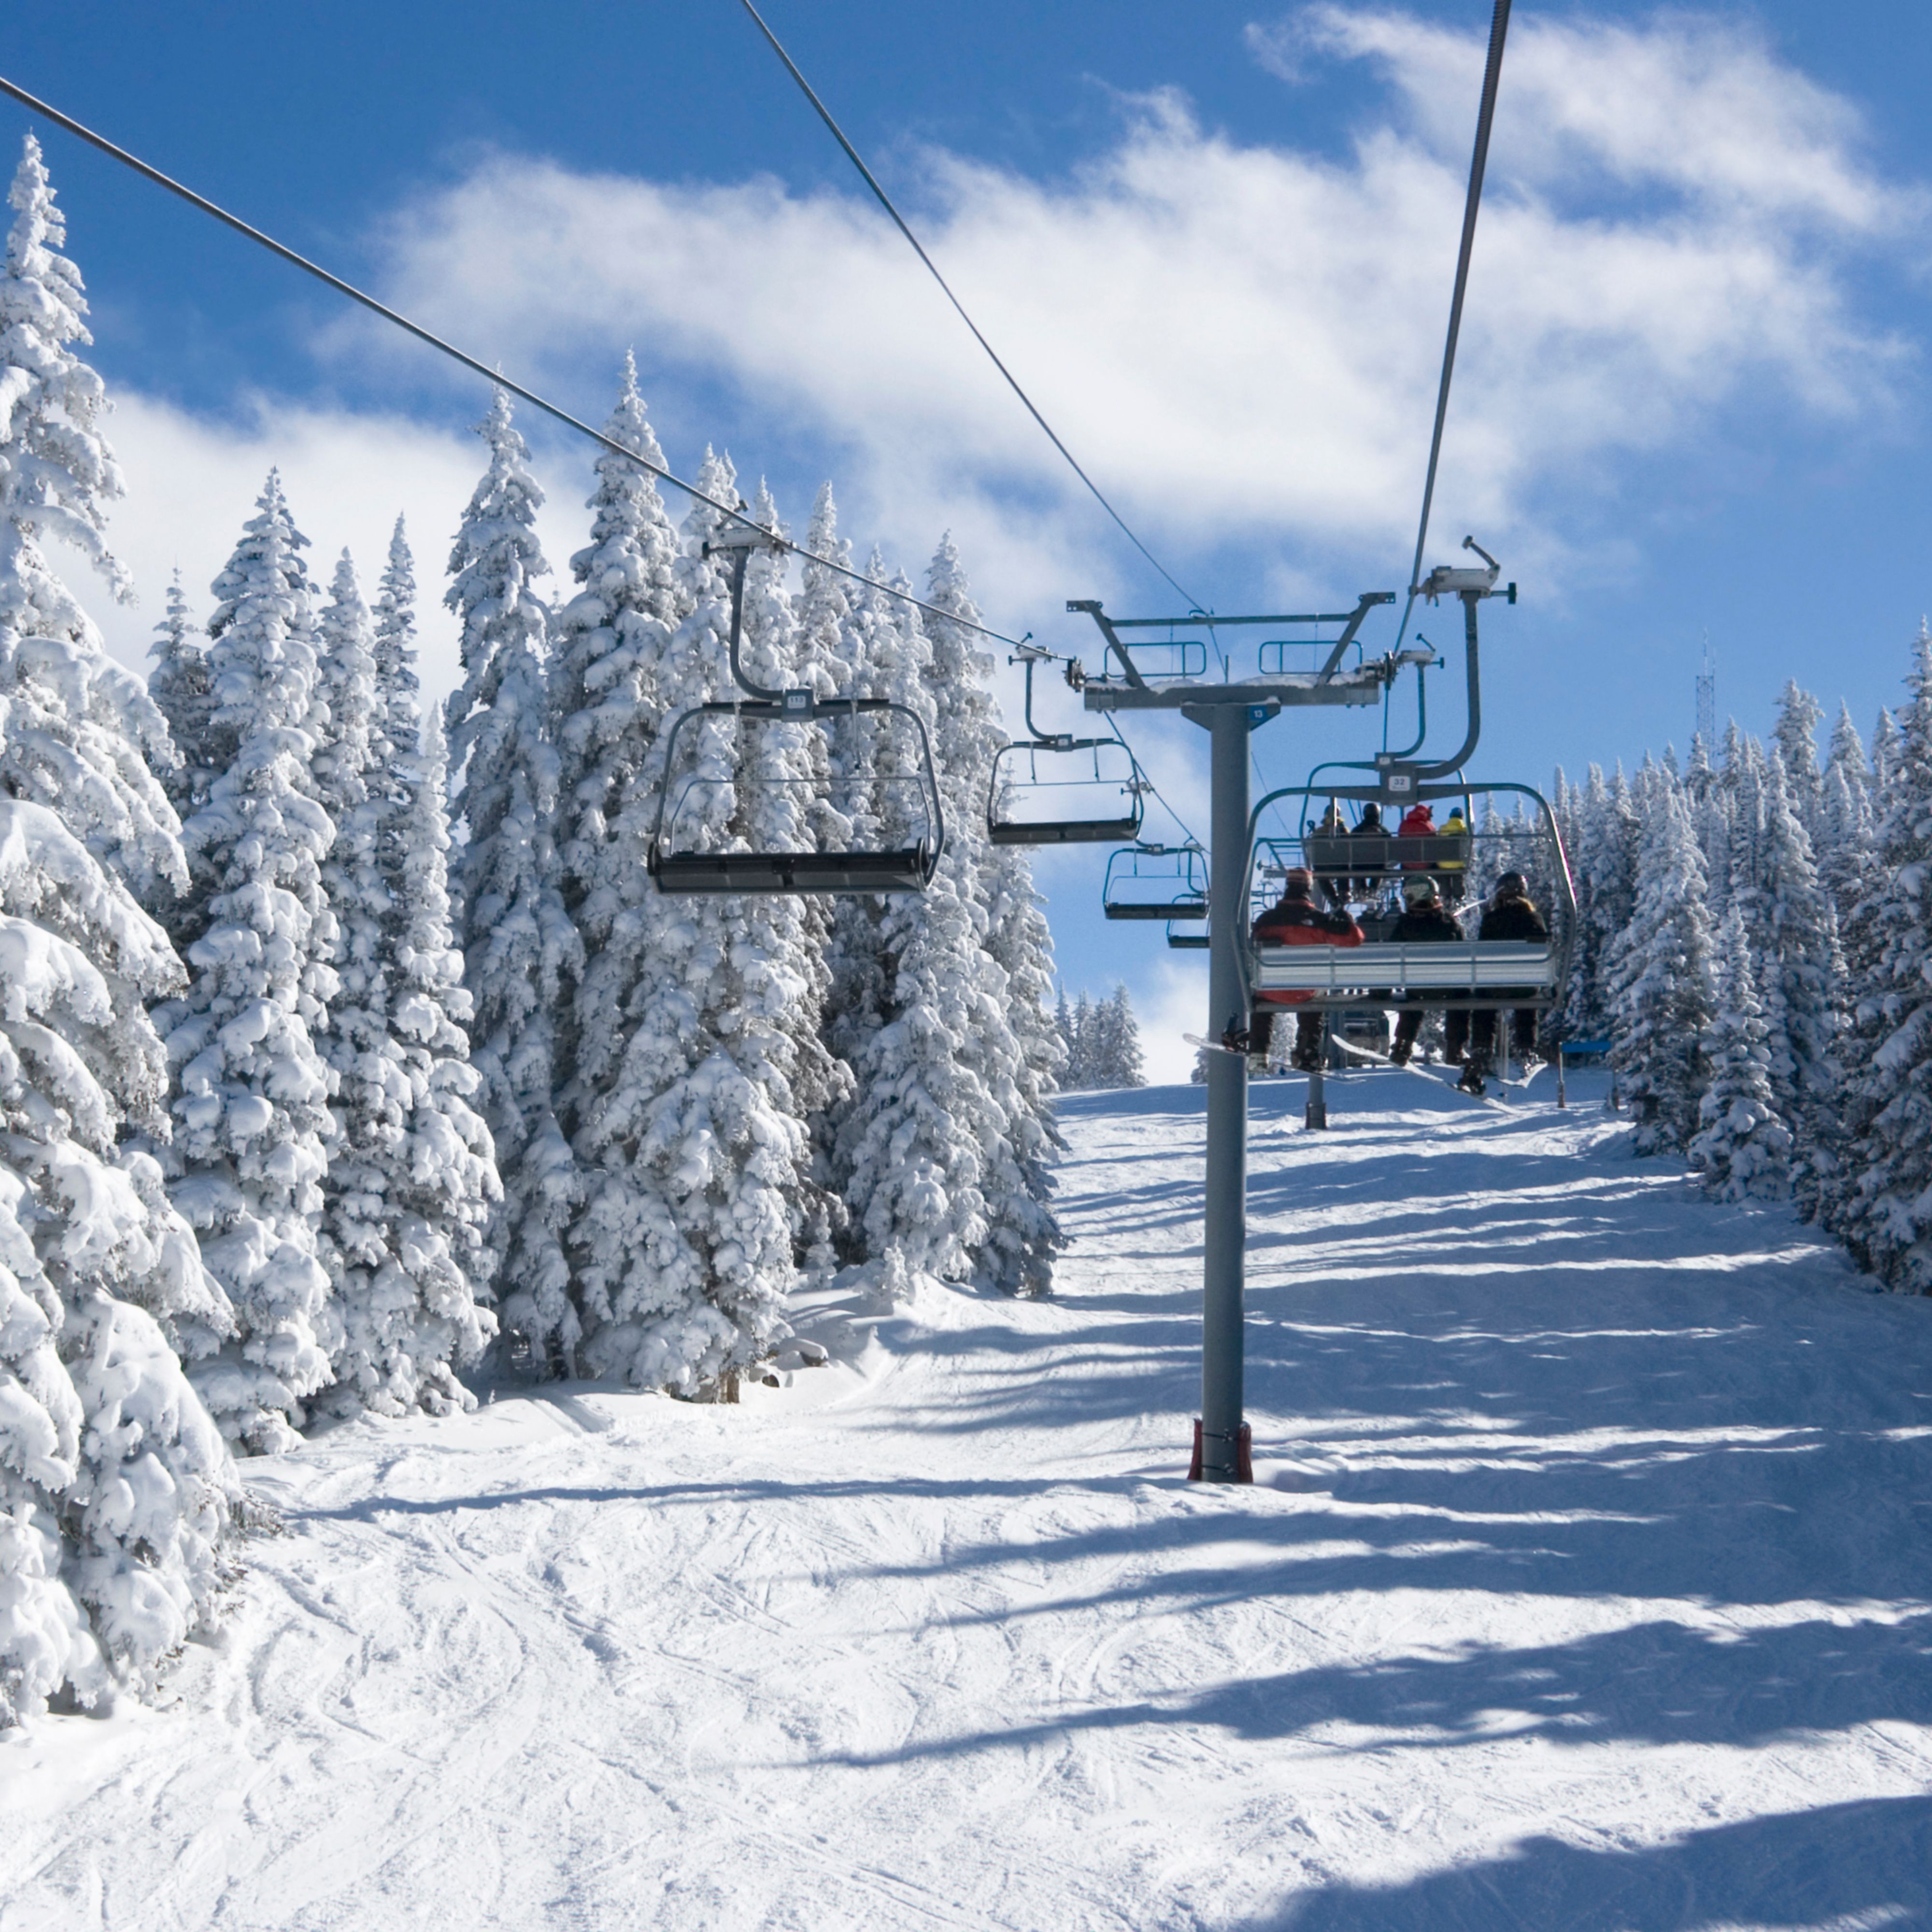 Ski lift going through snowy forest